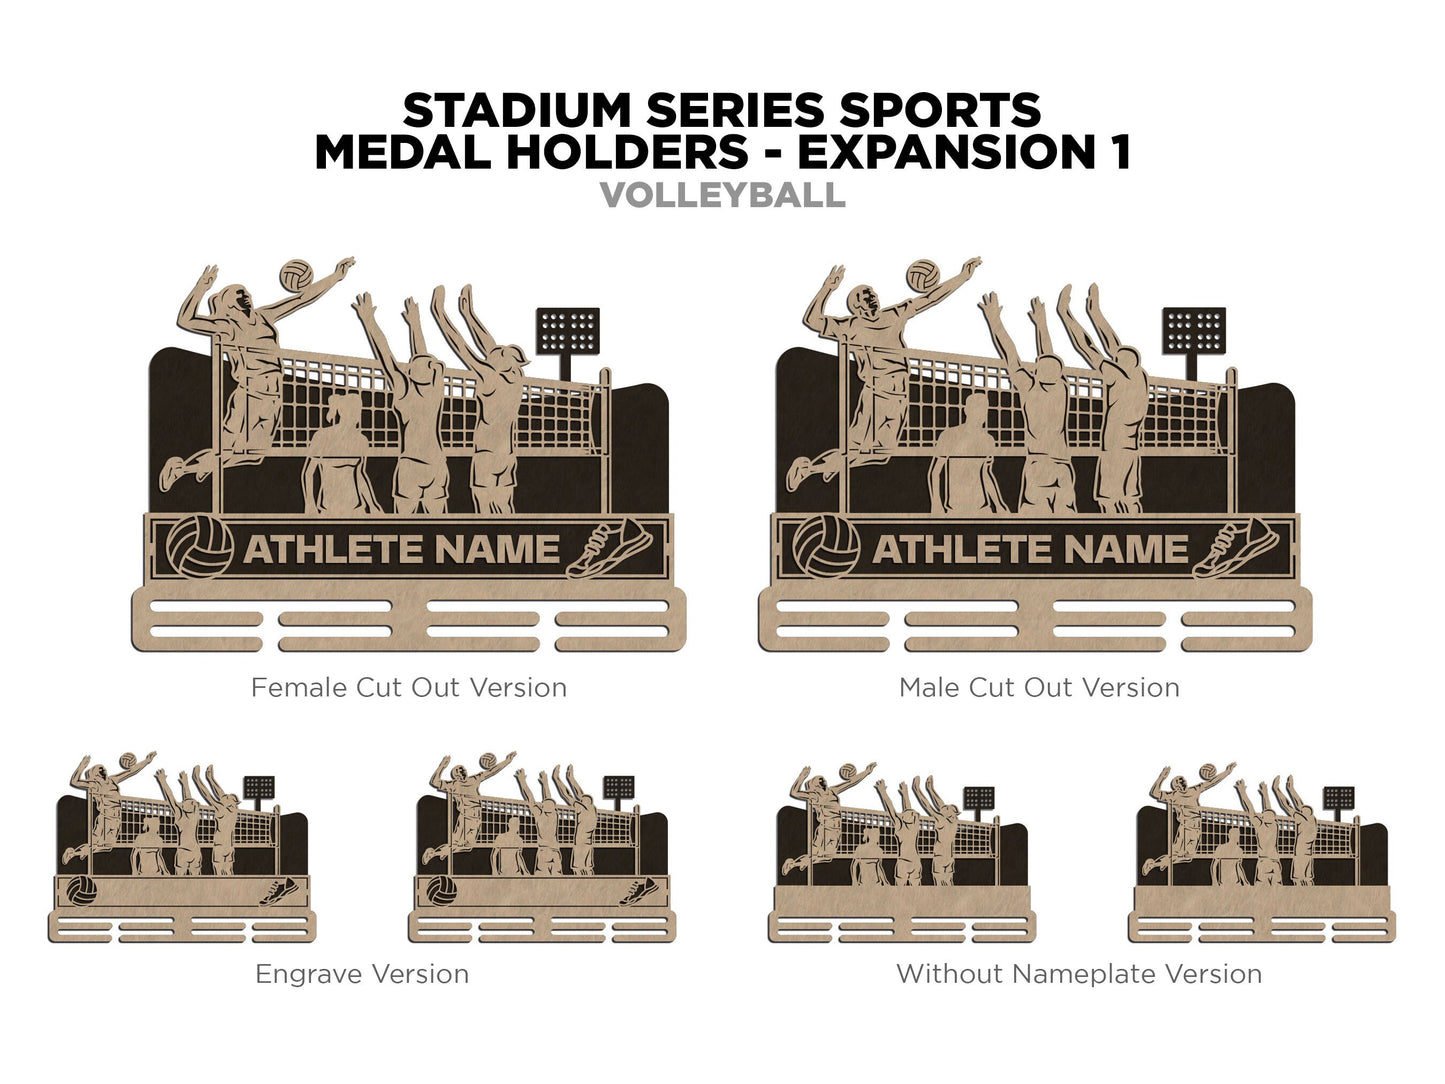 Stadium Series Medal Holders - Volleyball - SVG, PDF, AI Files - Glowforge & Lightburn Tested